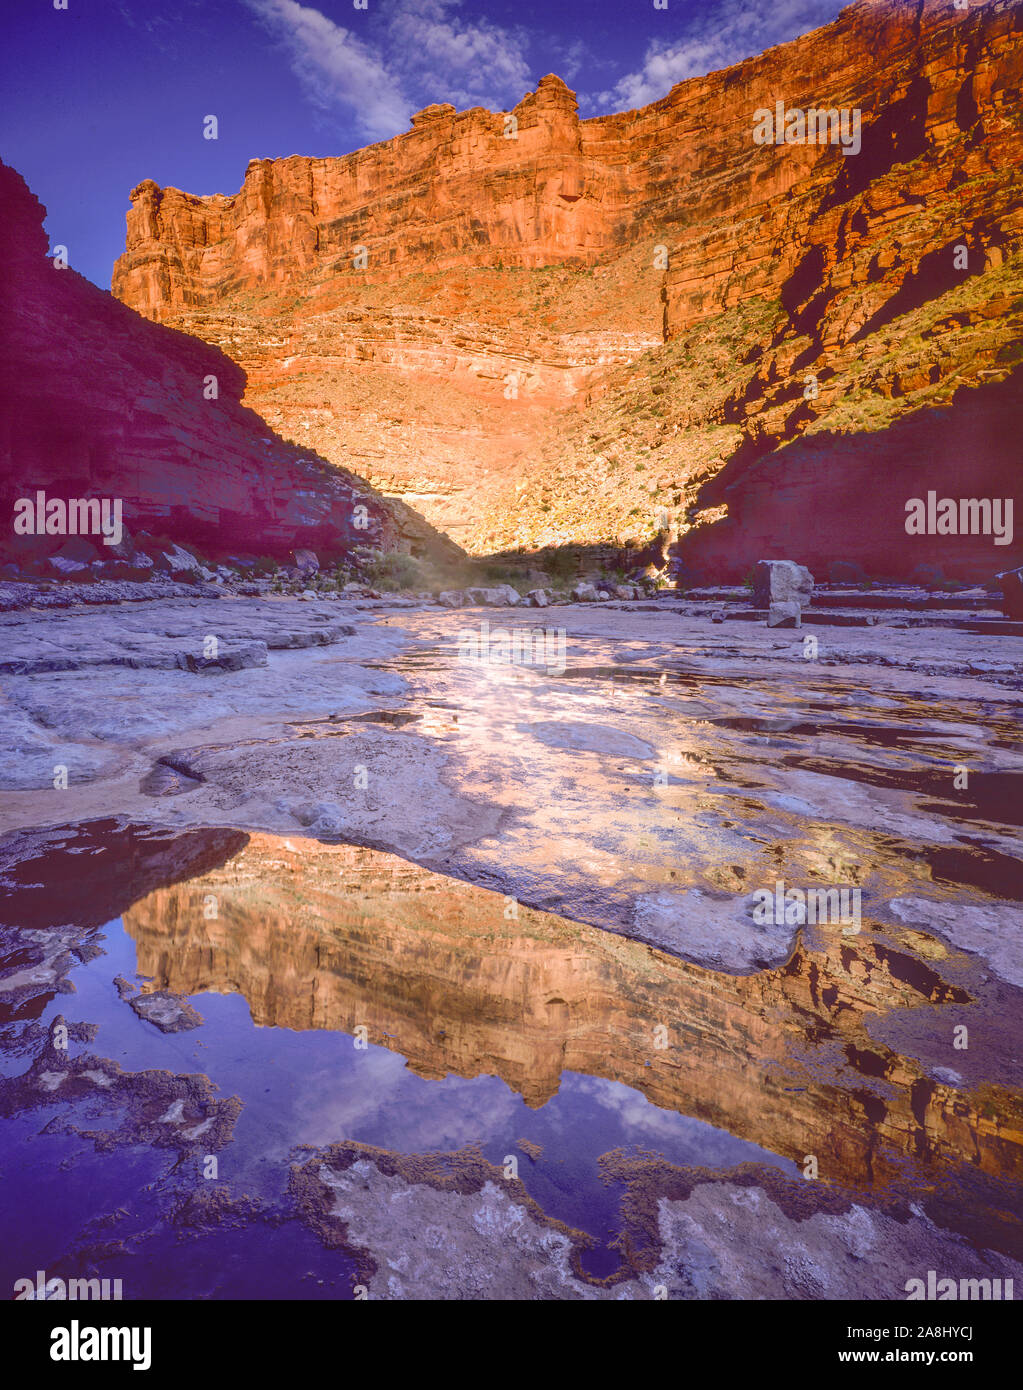 Reflections in Slickhorn Canyon, Slickhorn Canyon Wilderness Study Area, Near San Juan River, Utah,  Glen Canyon National Recreation Area Stock Photo